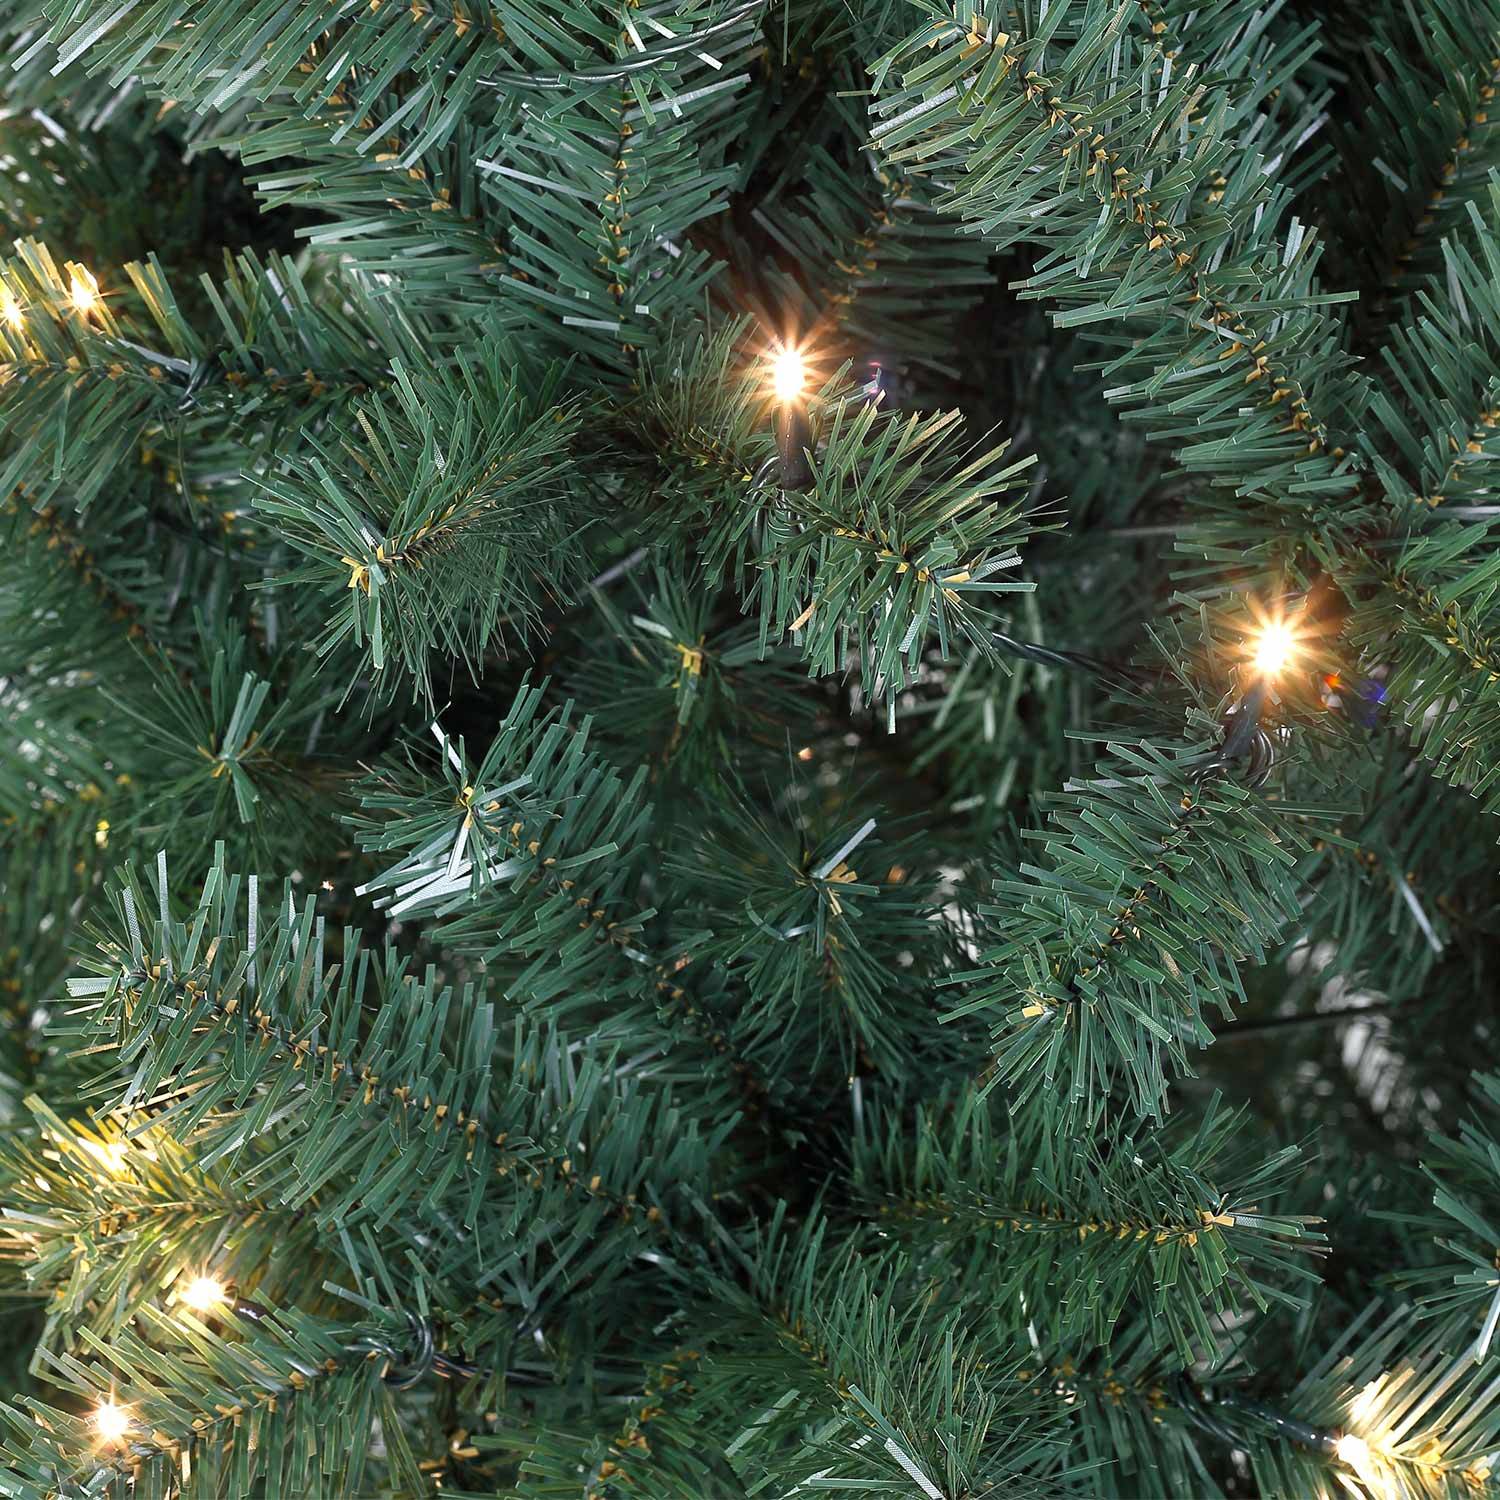 Sapin de Noël artificiel de 180 cm avec guirlande lumineuse et pied inclus Photo2